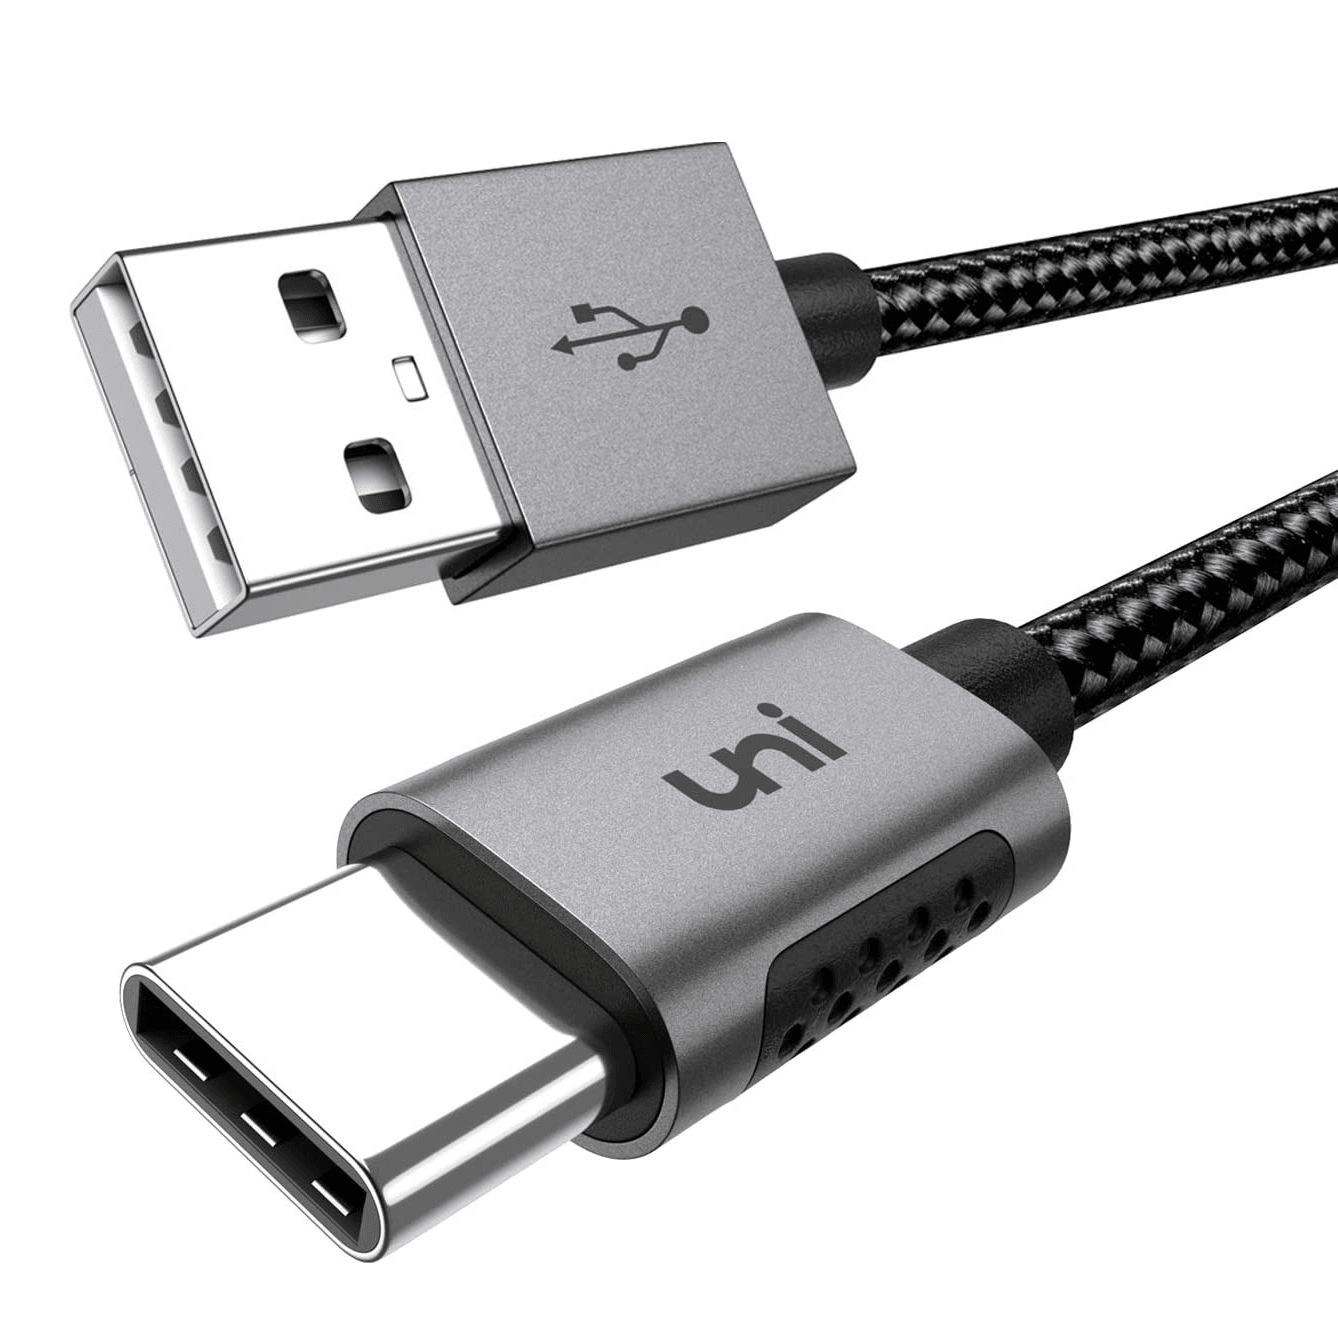 anders In de omgeving van prijs uni® USB C Fast Charging Cable, Universal Compatible | Fast, Safe, Solid